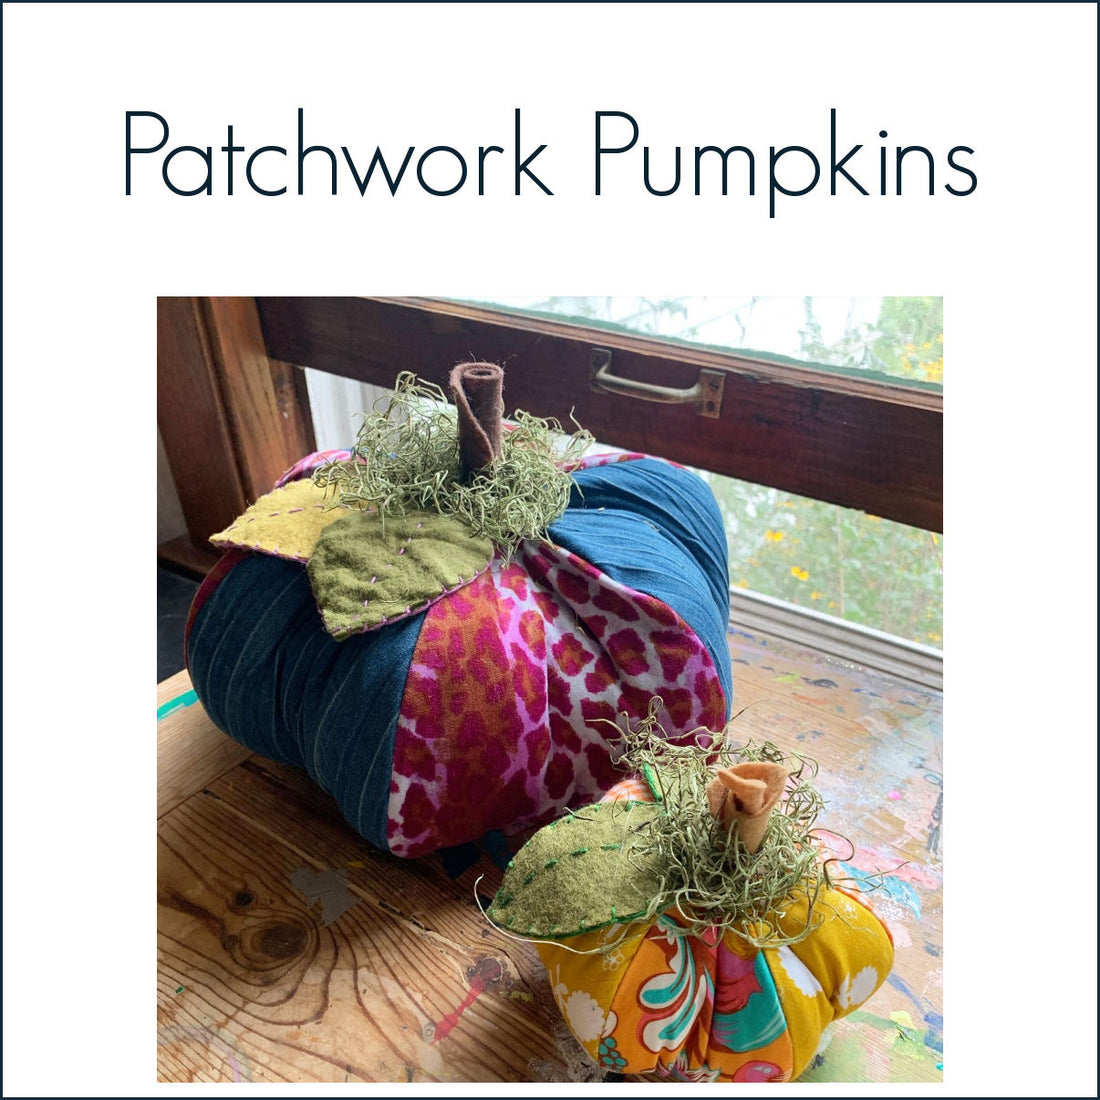 Patchwork Pumpkin pattern